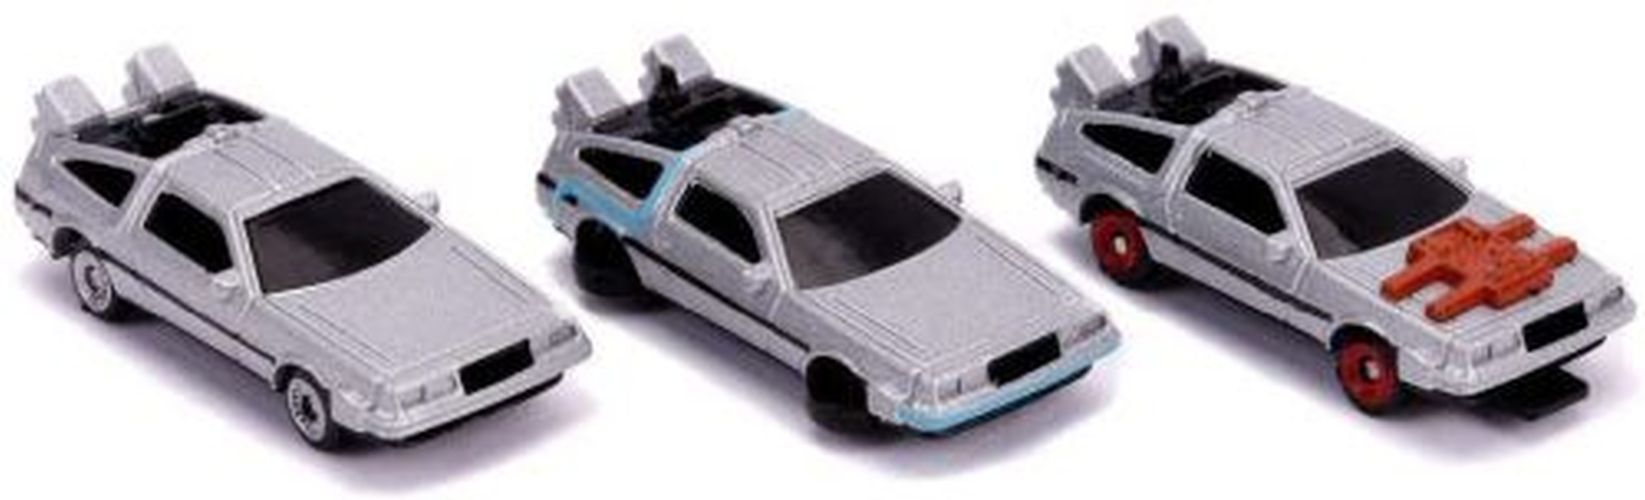 JADA TOYS Back To The Future Nano Hollywood Rides 3 Piece Vehicle Set - 